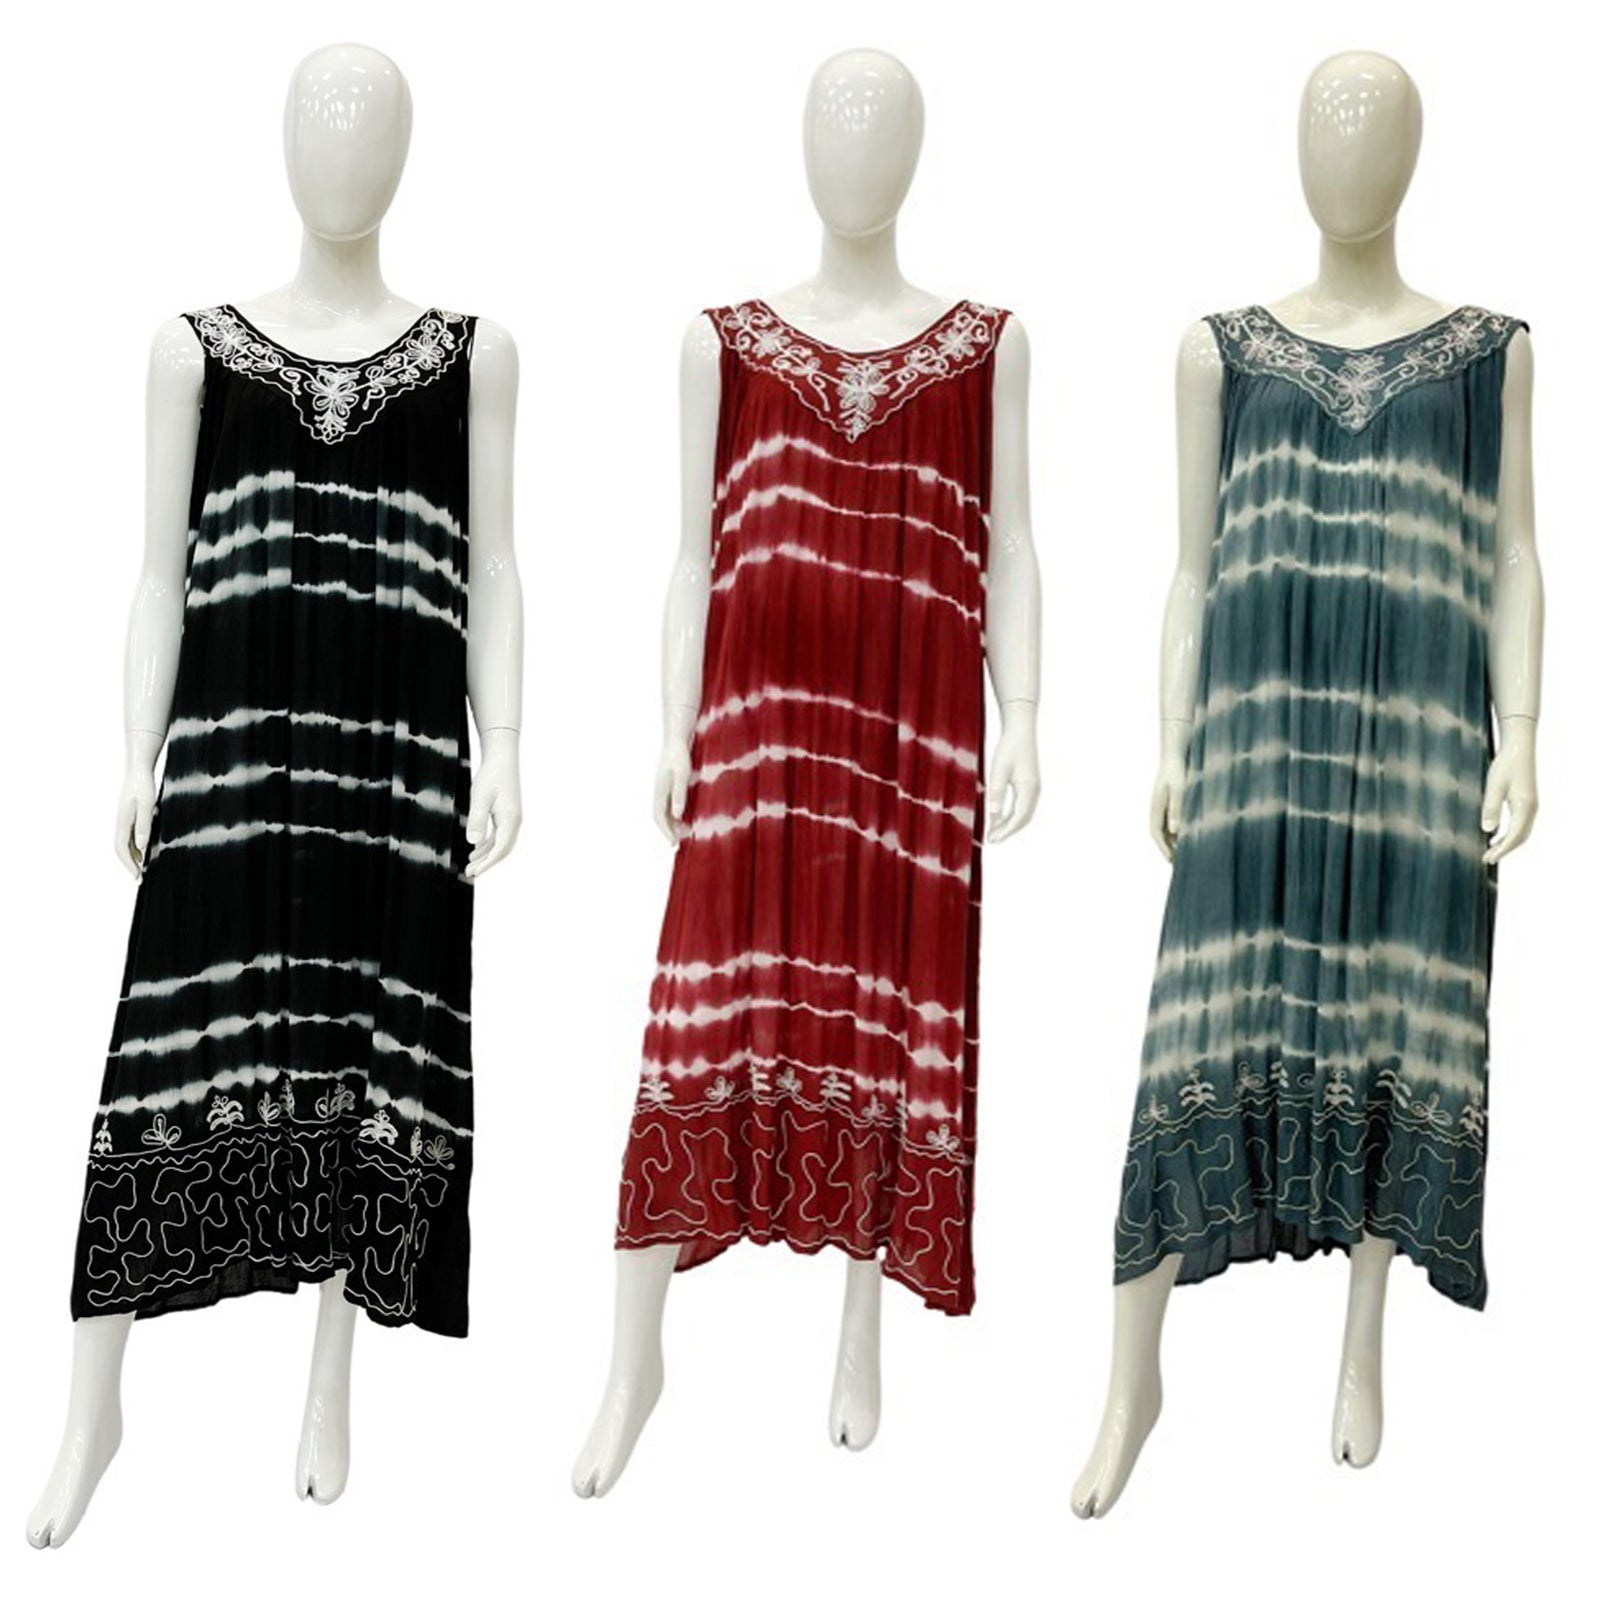 Wholesale Women's Dresses Rayon Crape Tei-Dye Sl V Neck Long with Embedded-Handpaint-Stone 120Gms Asst 3C 6-36-Case O-S Saige NWa8